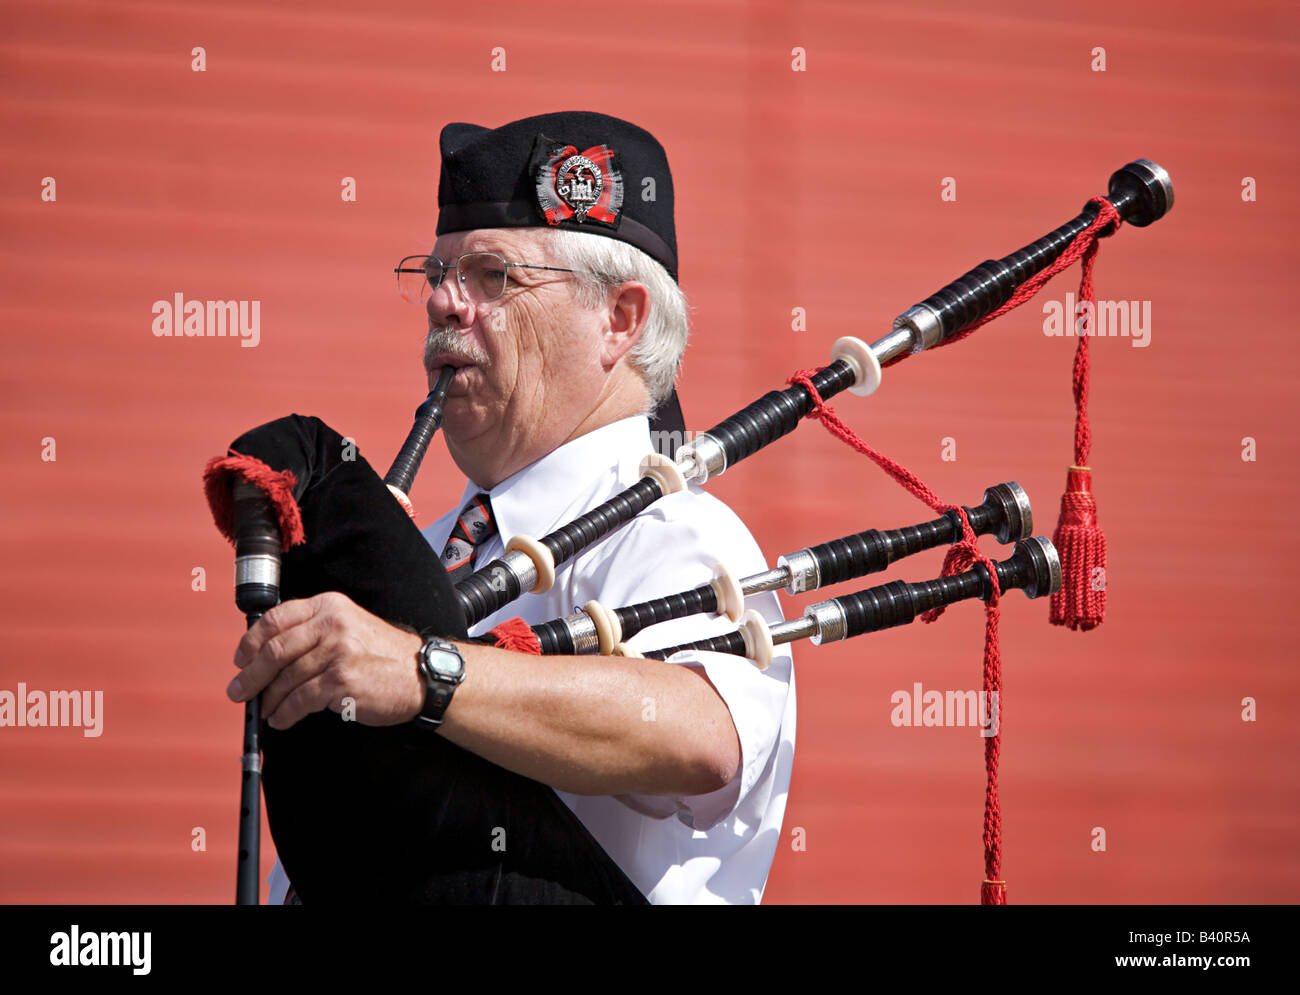 Male bagpiper playing Scottish music Stock Photo